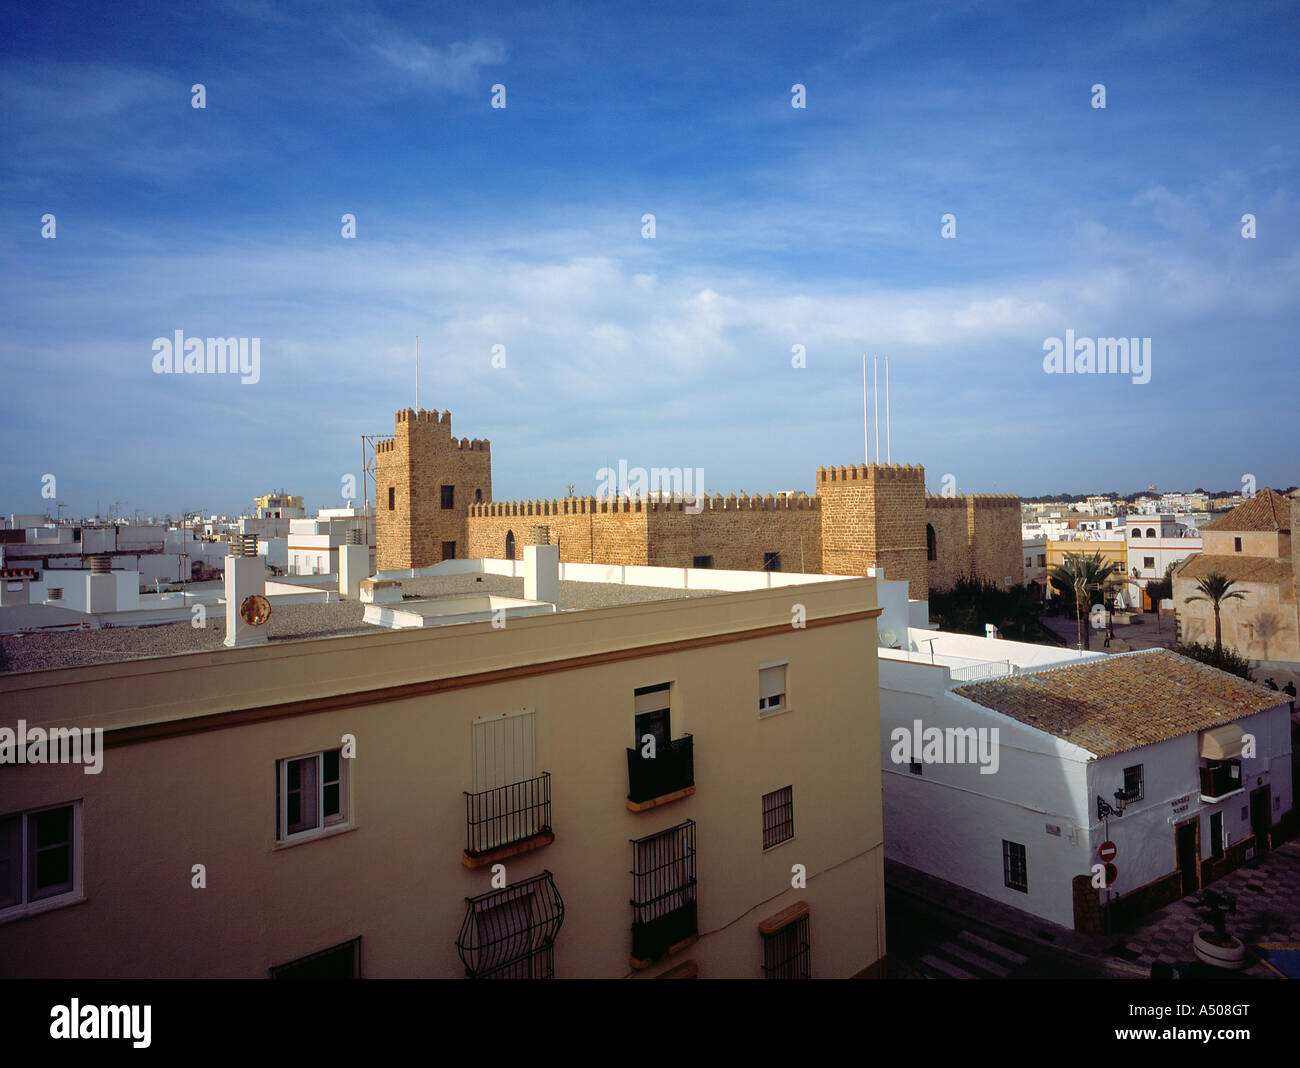 Blick auf die Stadt Rota, Andalusien, Spanien Europas. Foto: Willy Matheisl Stockfoto